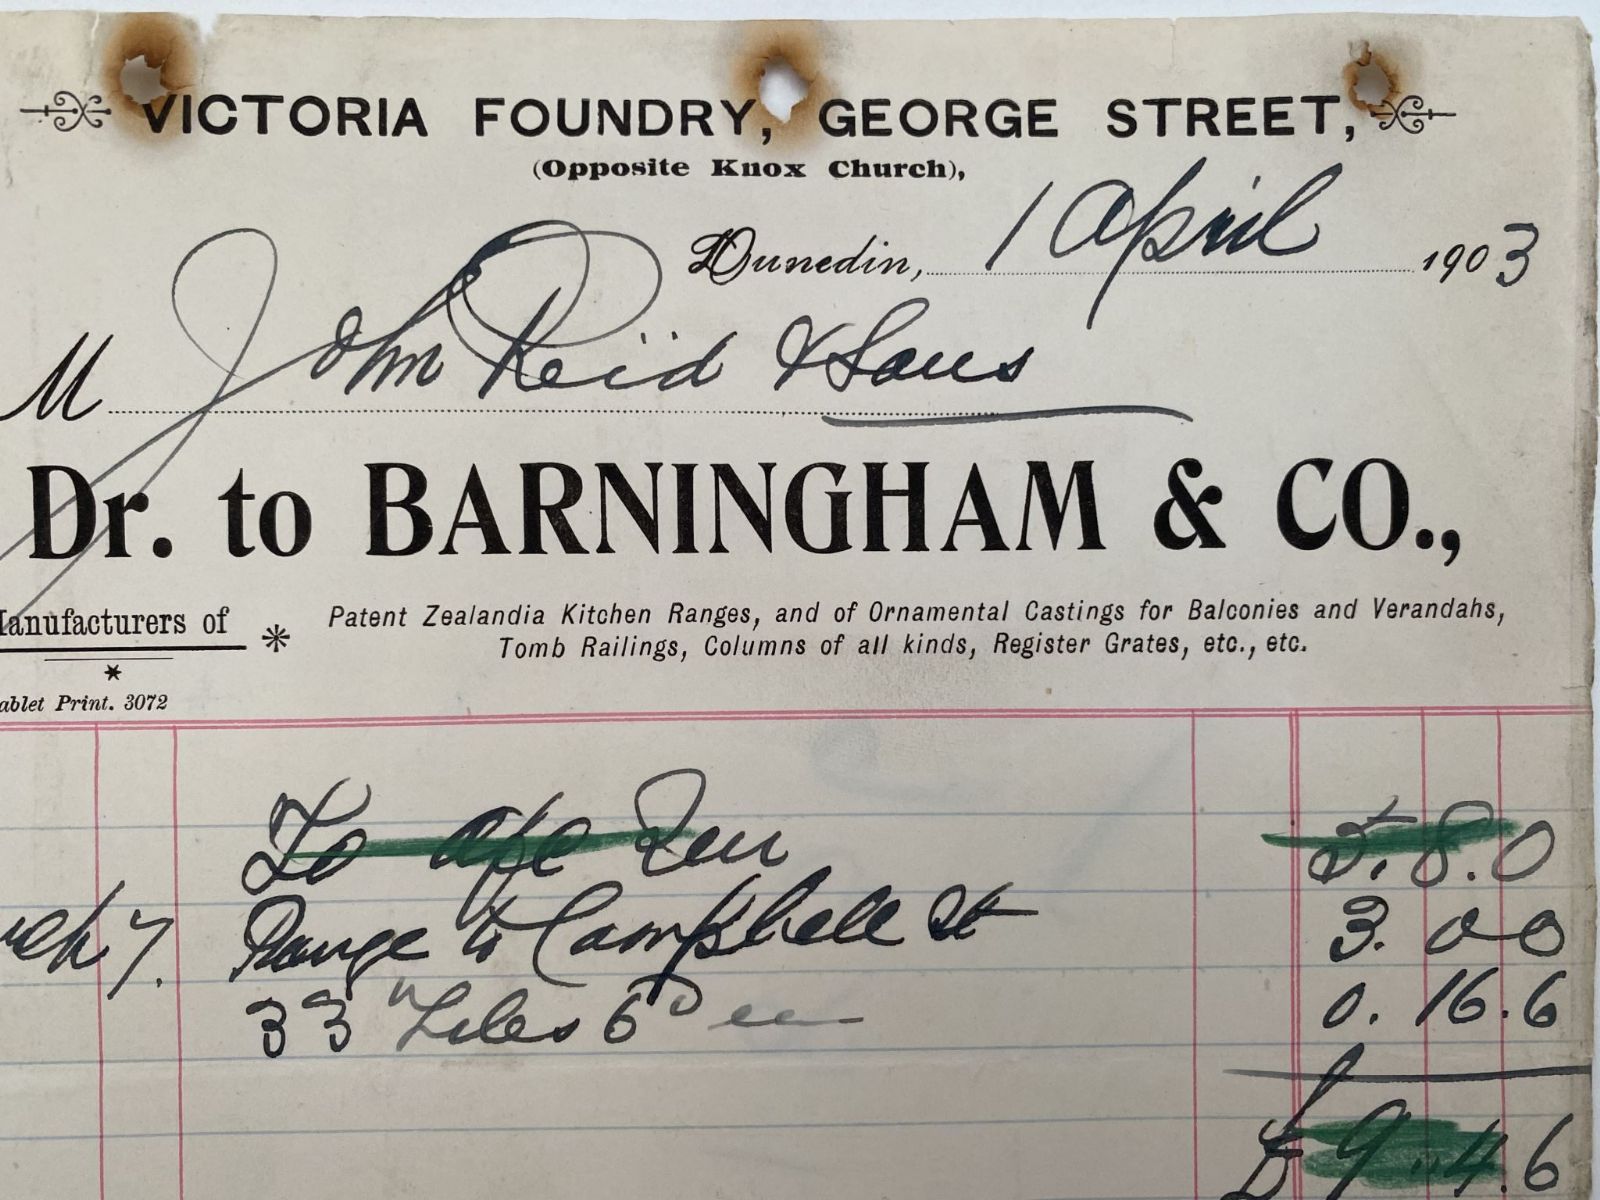 ANTIQUE INVOICE / RECEIPT: Barningham & Co, Dunedin - Manufacturers 1903